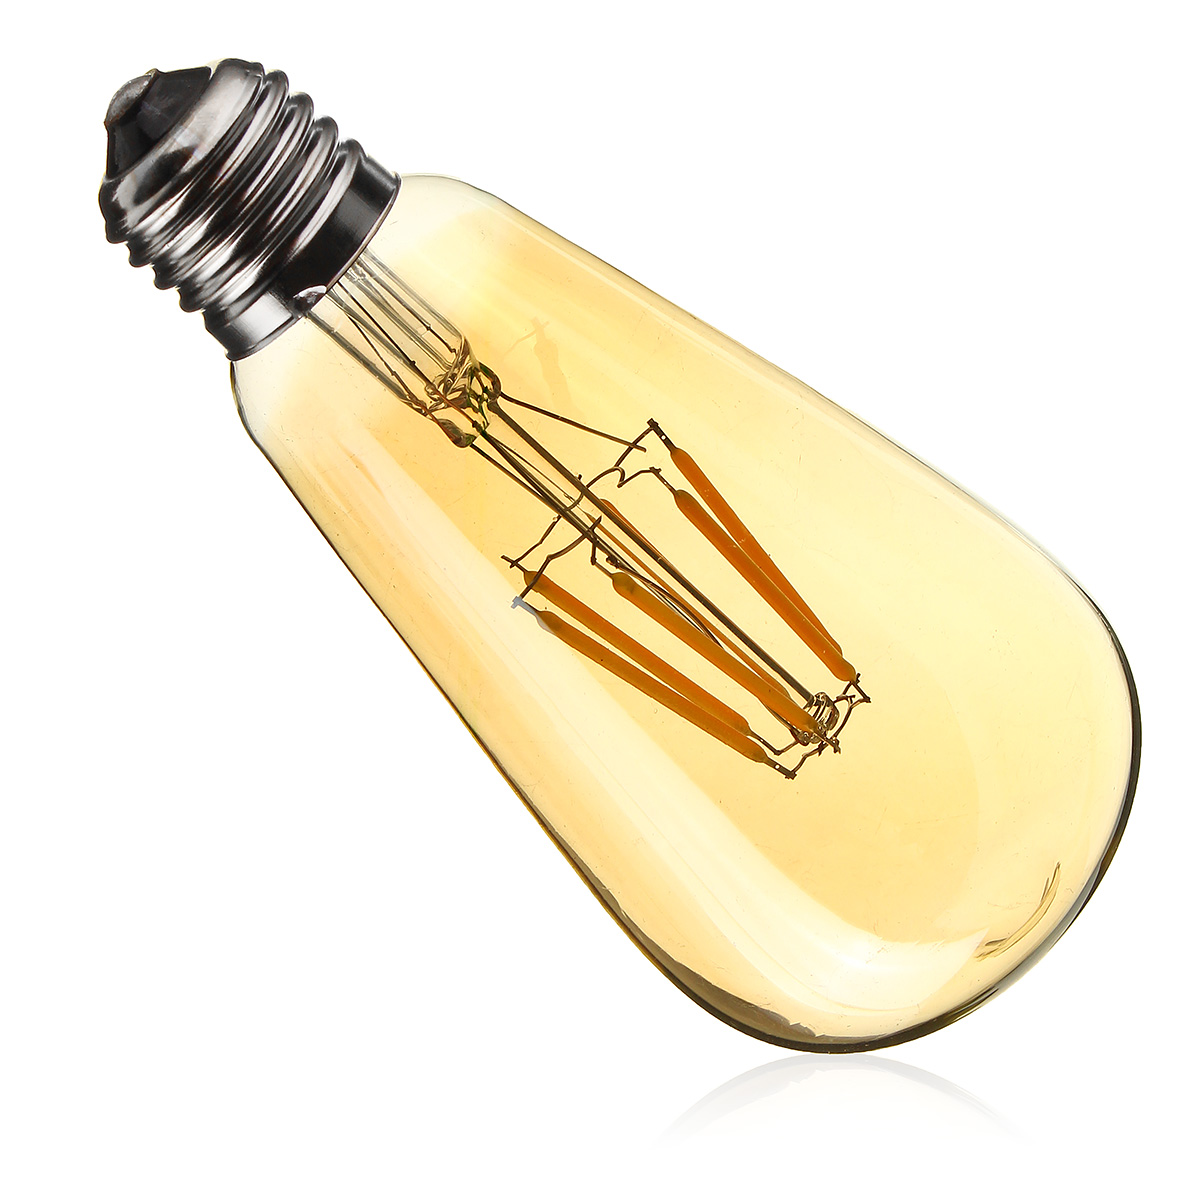 E27-ST64-6W-Golden-Cover-Dimmable-Edison-Retro-Vintage-Filament-COB-LED-Bulb-Light-Lamp-AC110220V-1113827-5